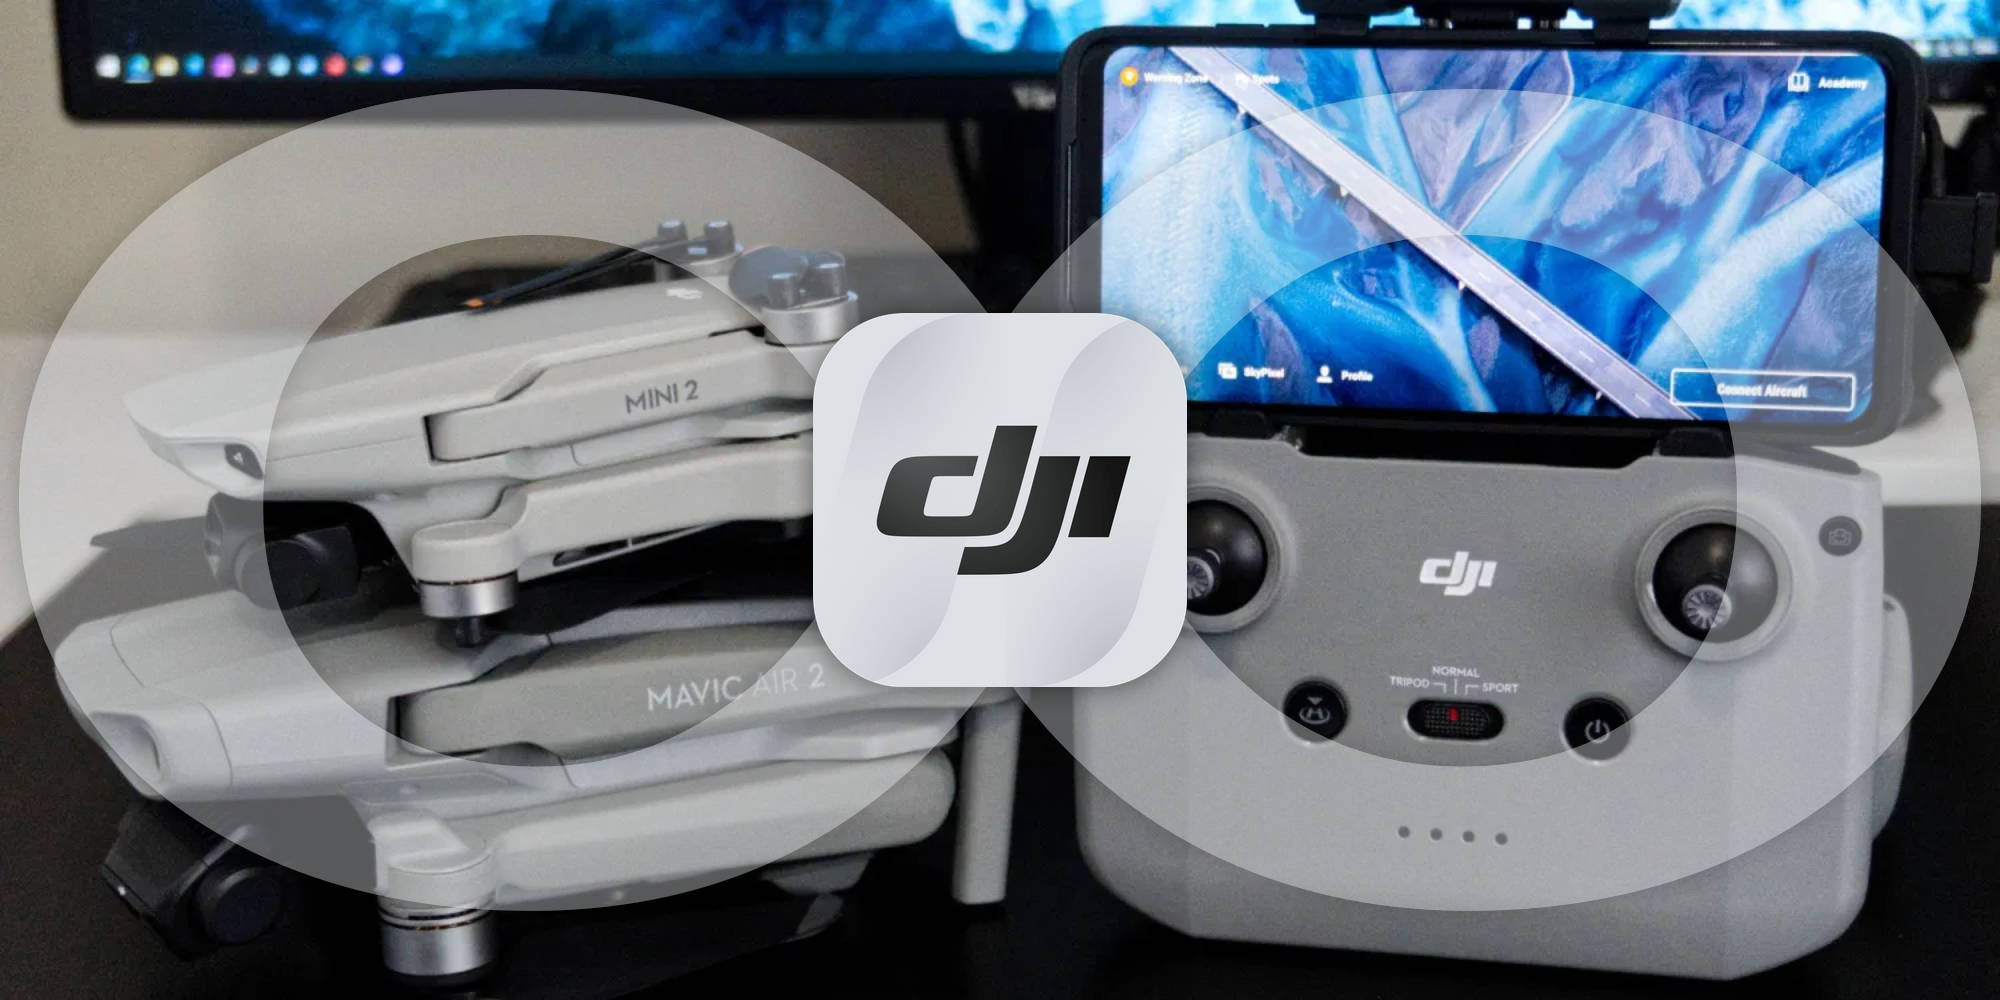 How to bind your DJI Mavic Air 2 Mini 2 to your DJI account - DroneDJ